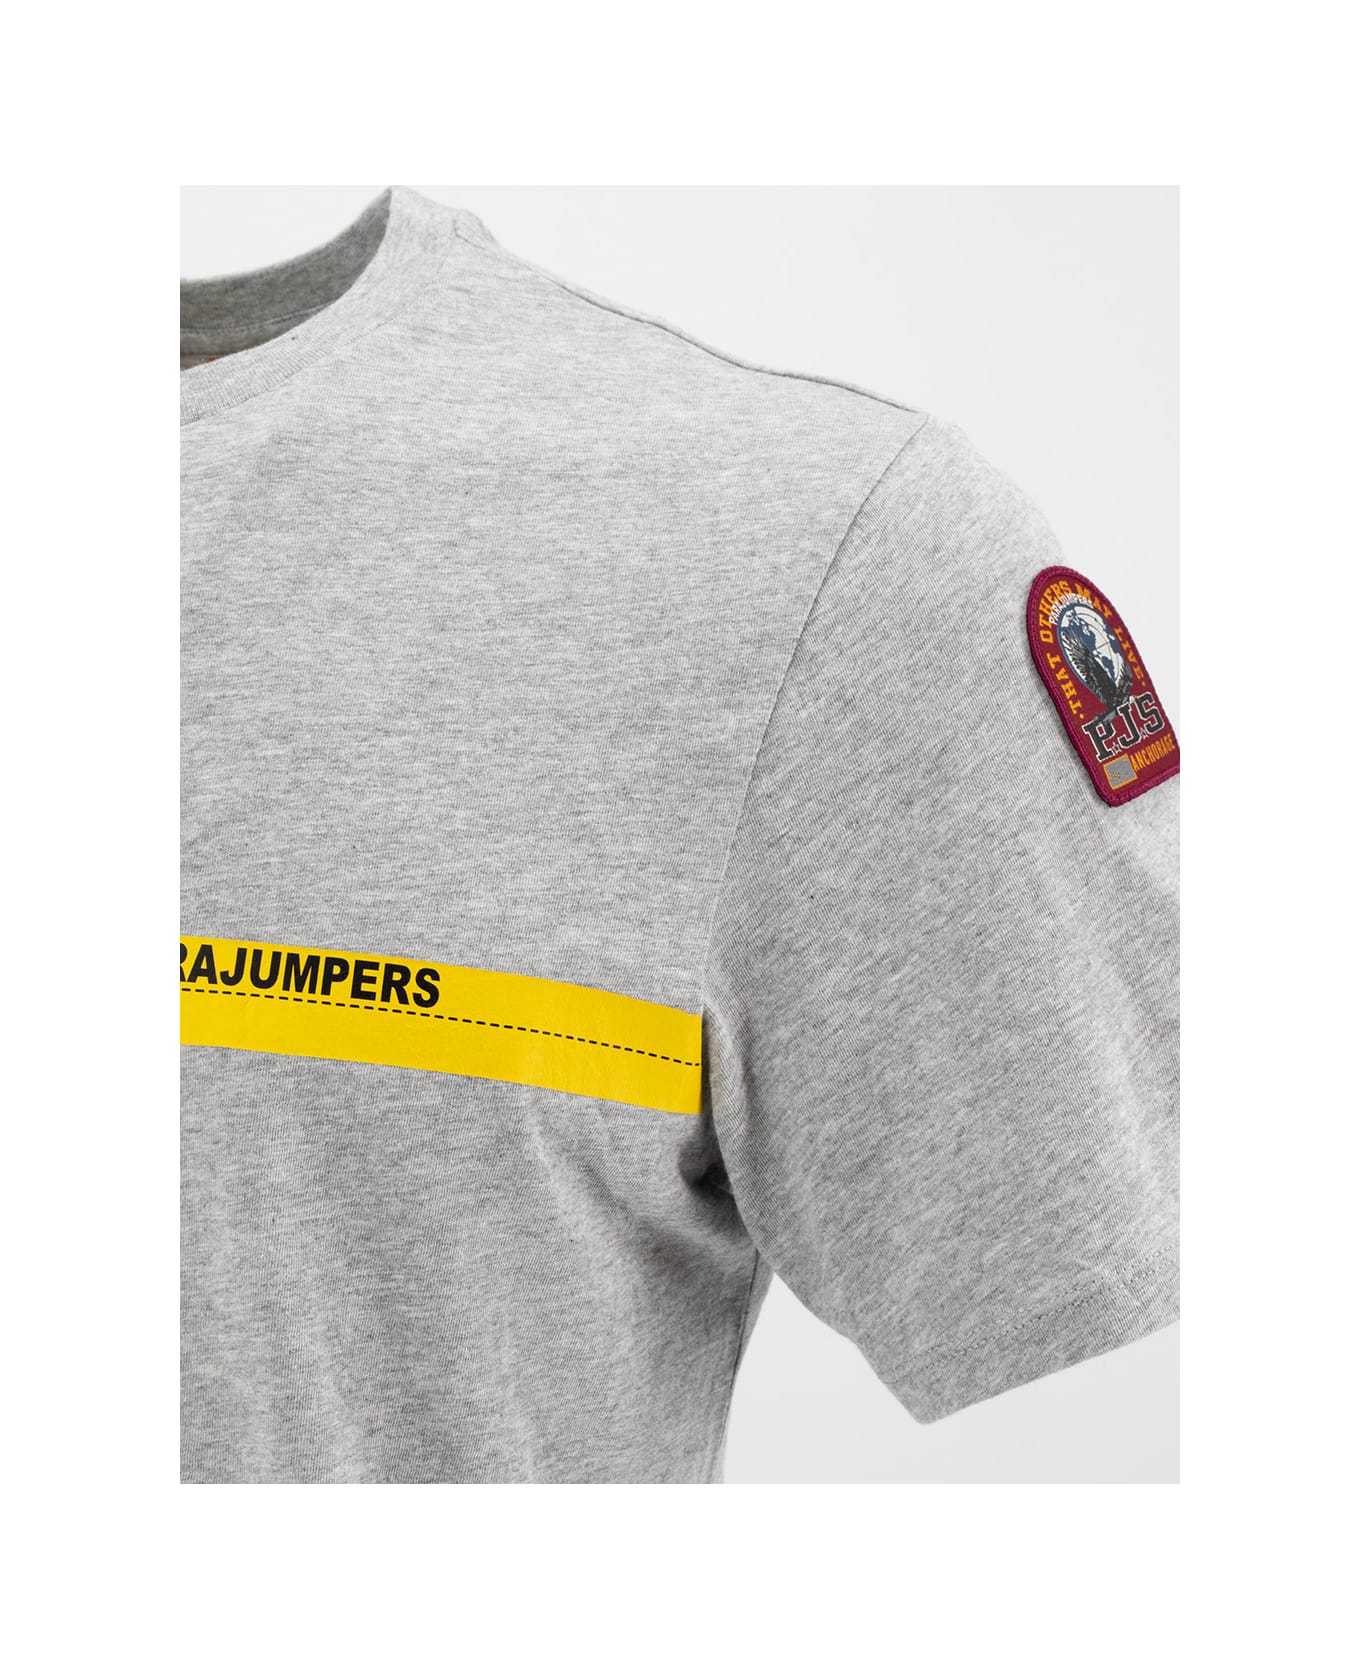 Parajumpers T-shirt - SILVER MELANGE